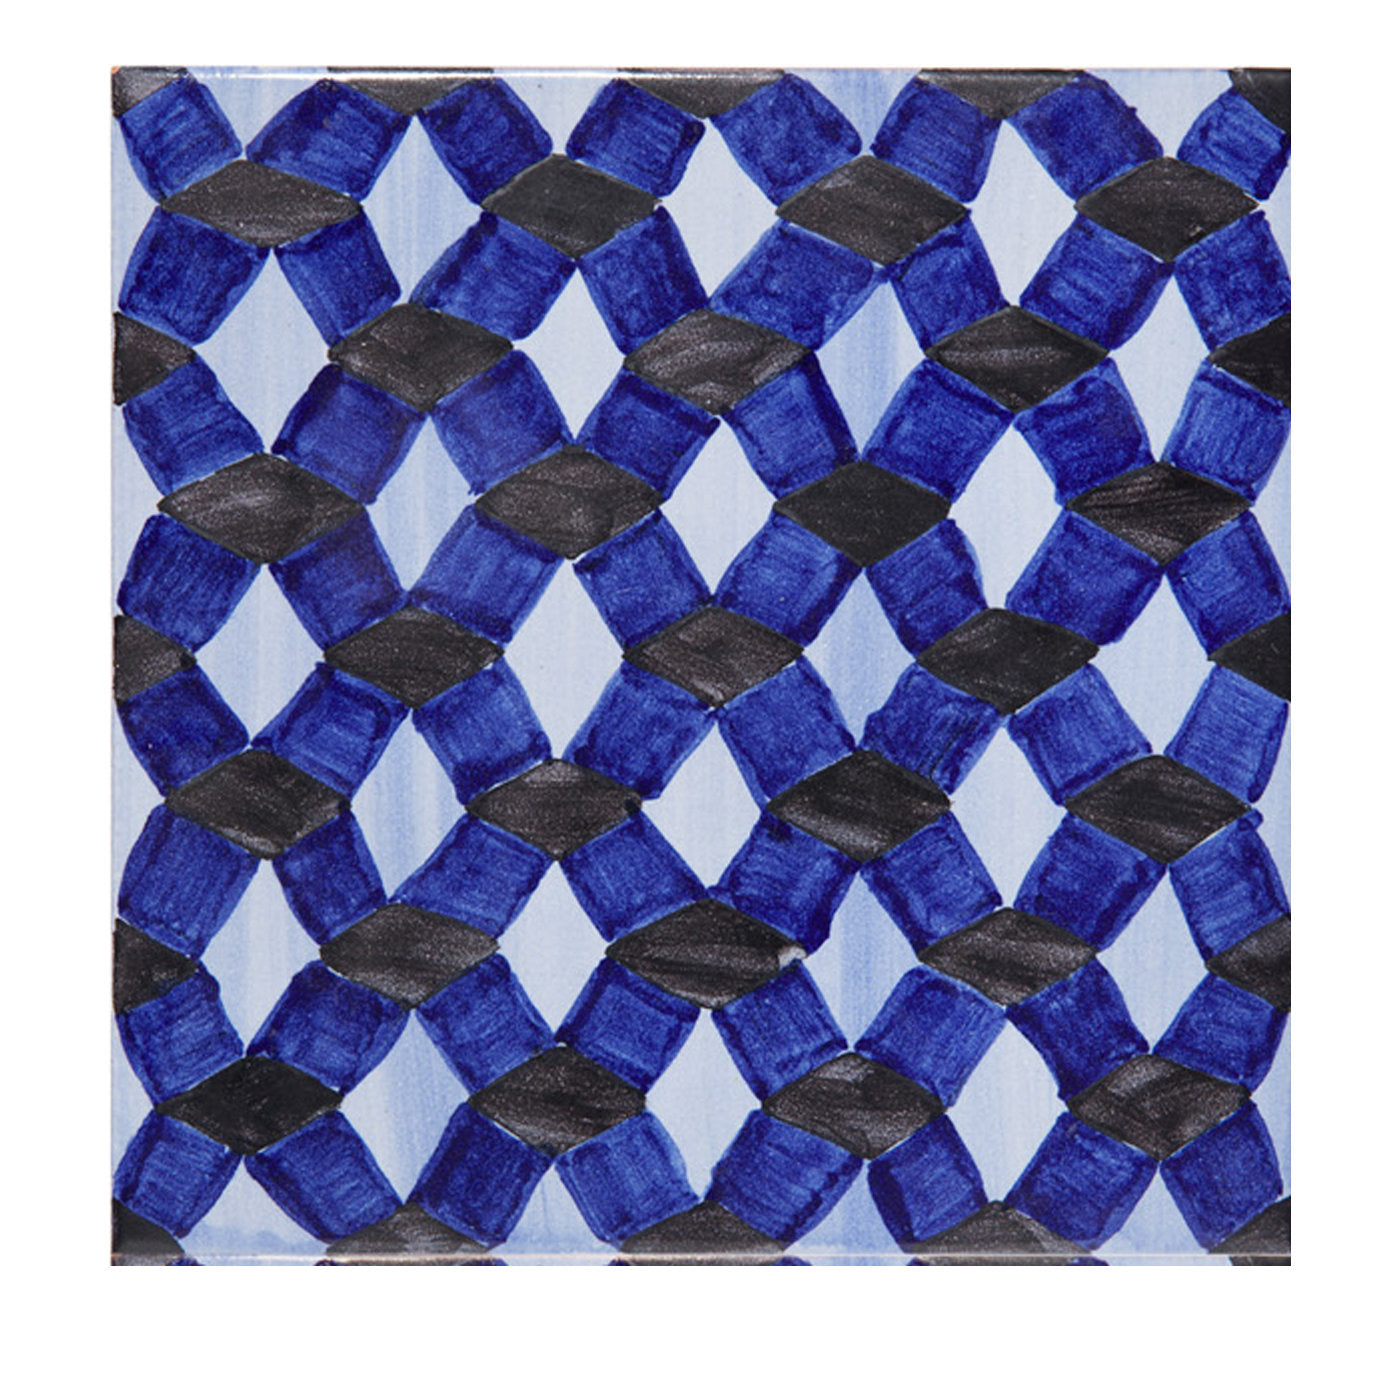 4 Diamante Blue and Black Tiles - Alternative view 1